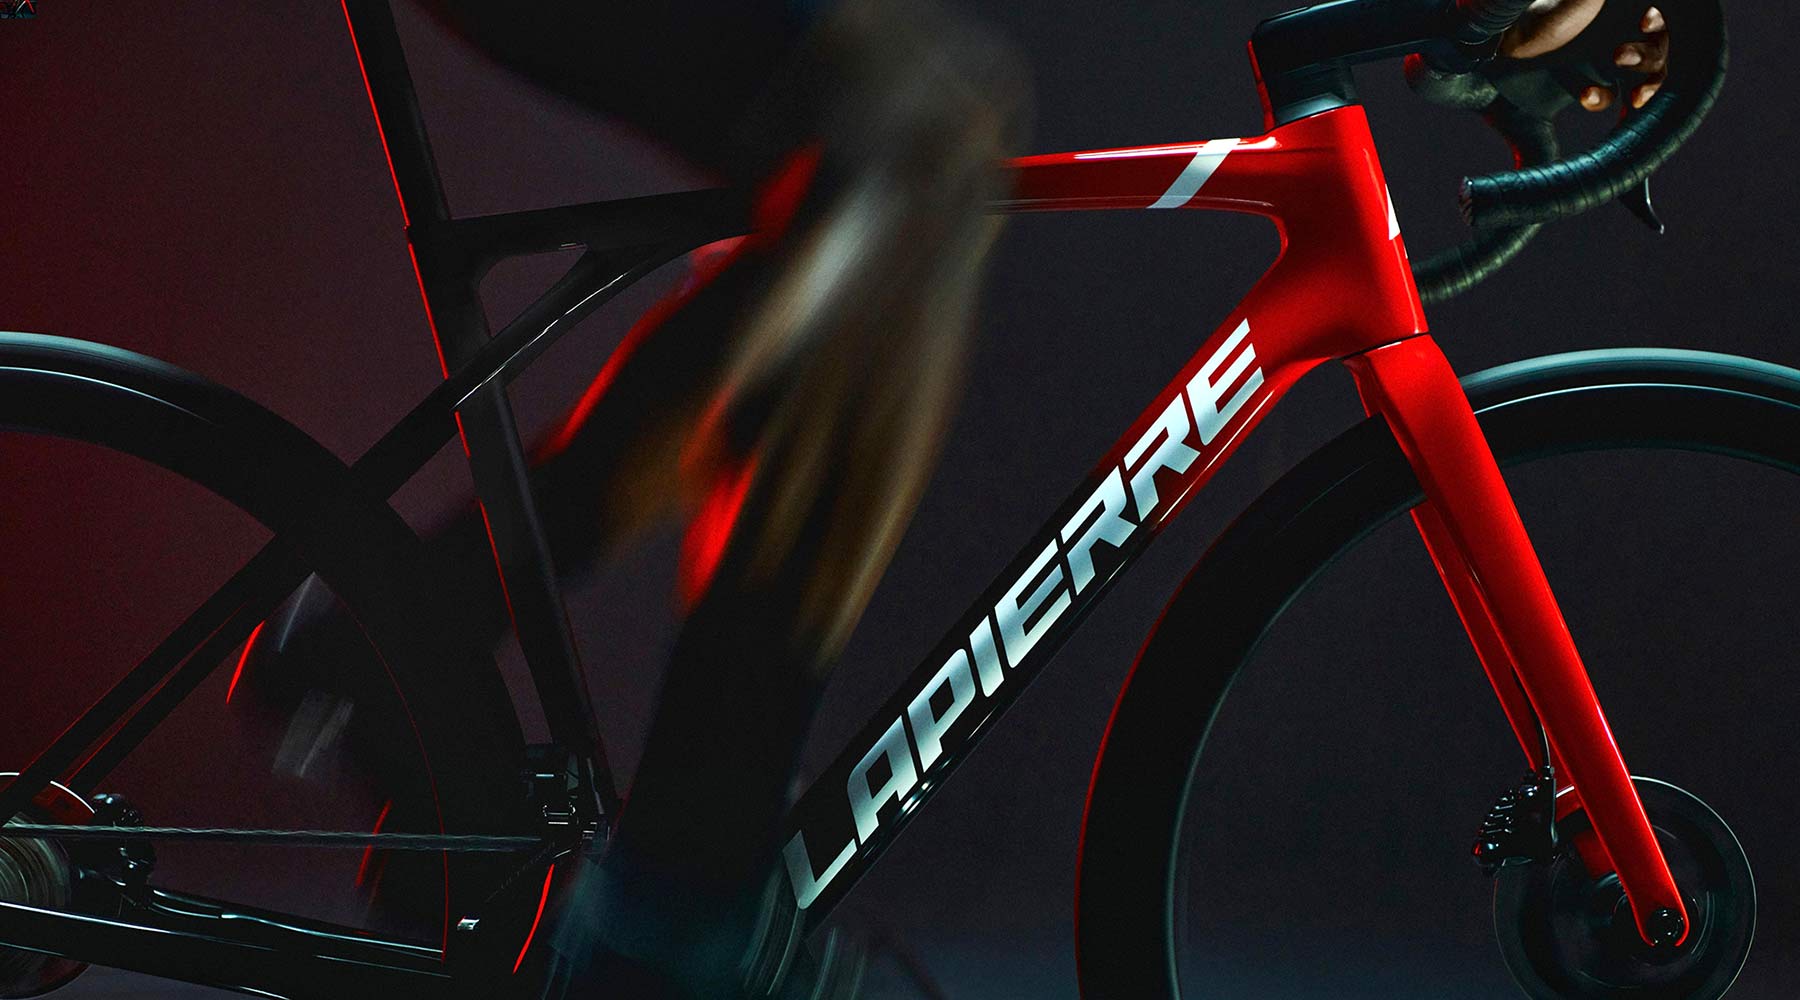 2022 Lapierre Xelius SL3 road bike, faster lighter more aero, blur